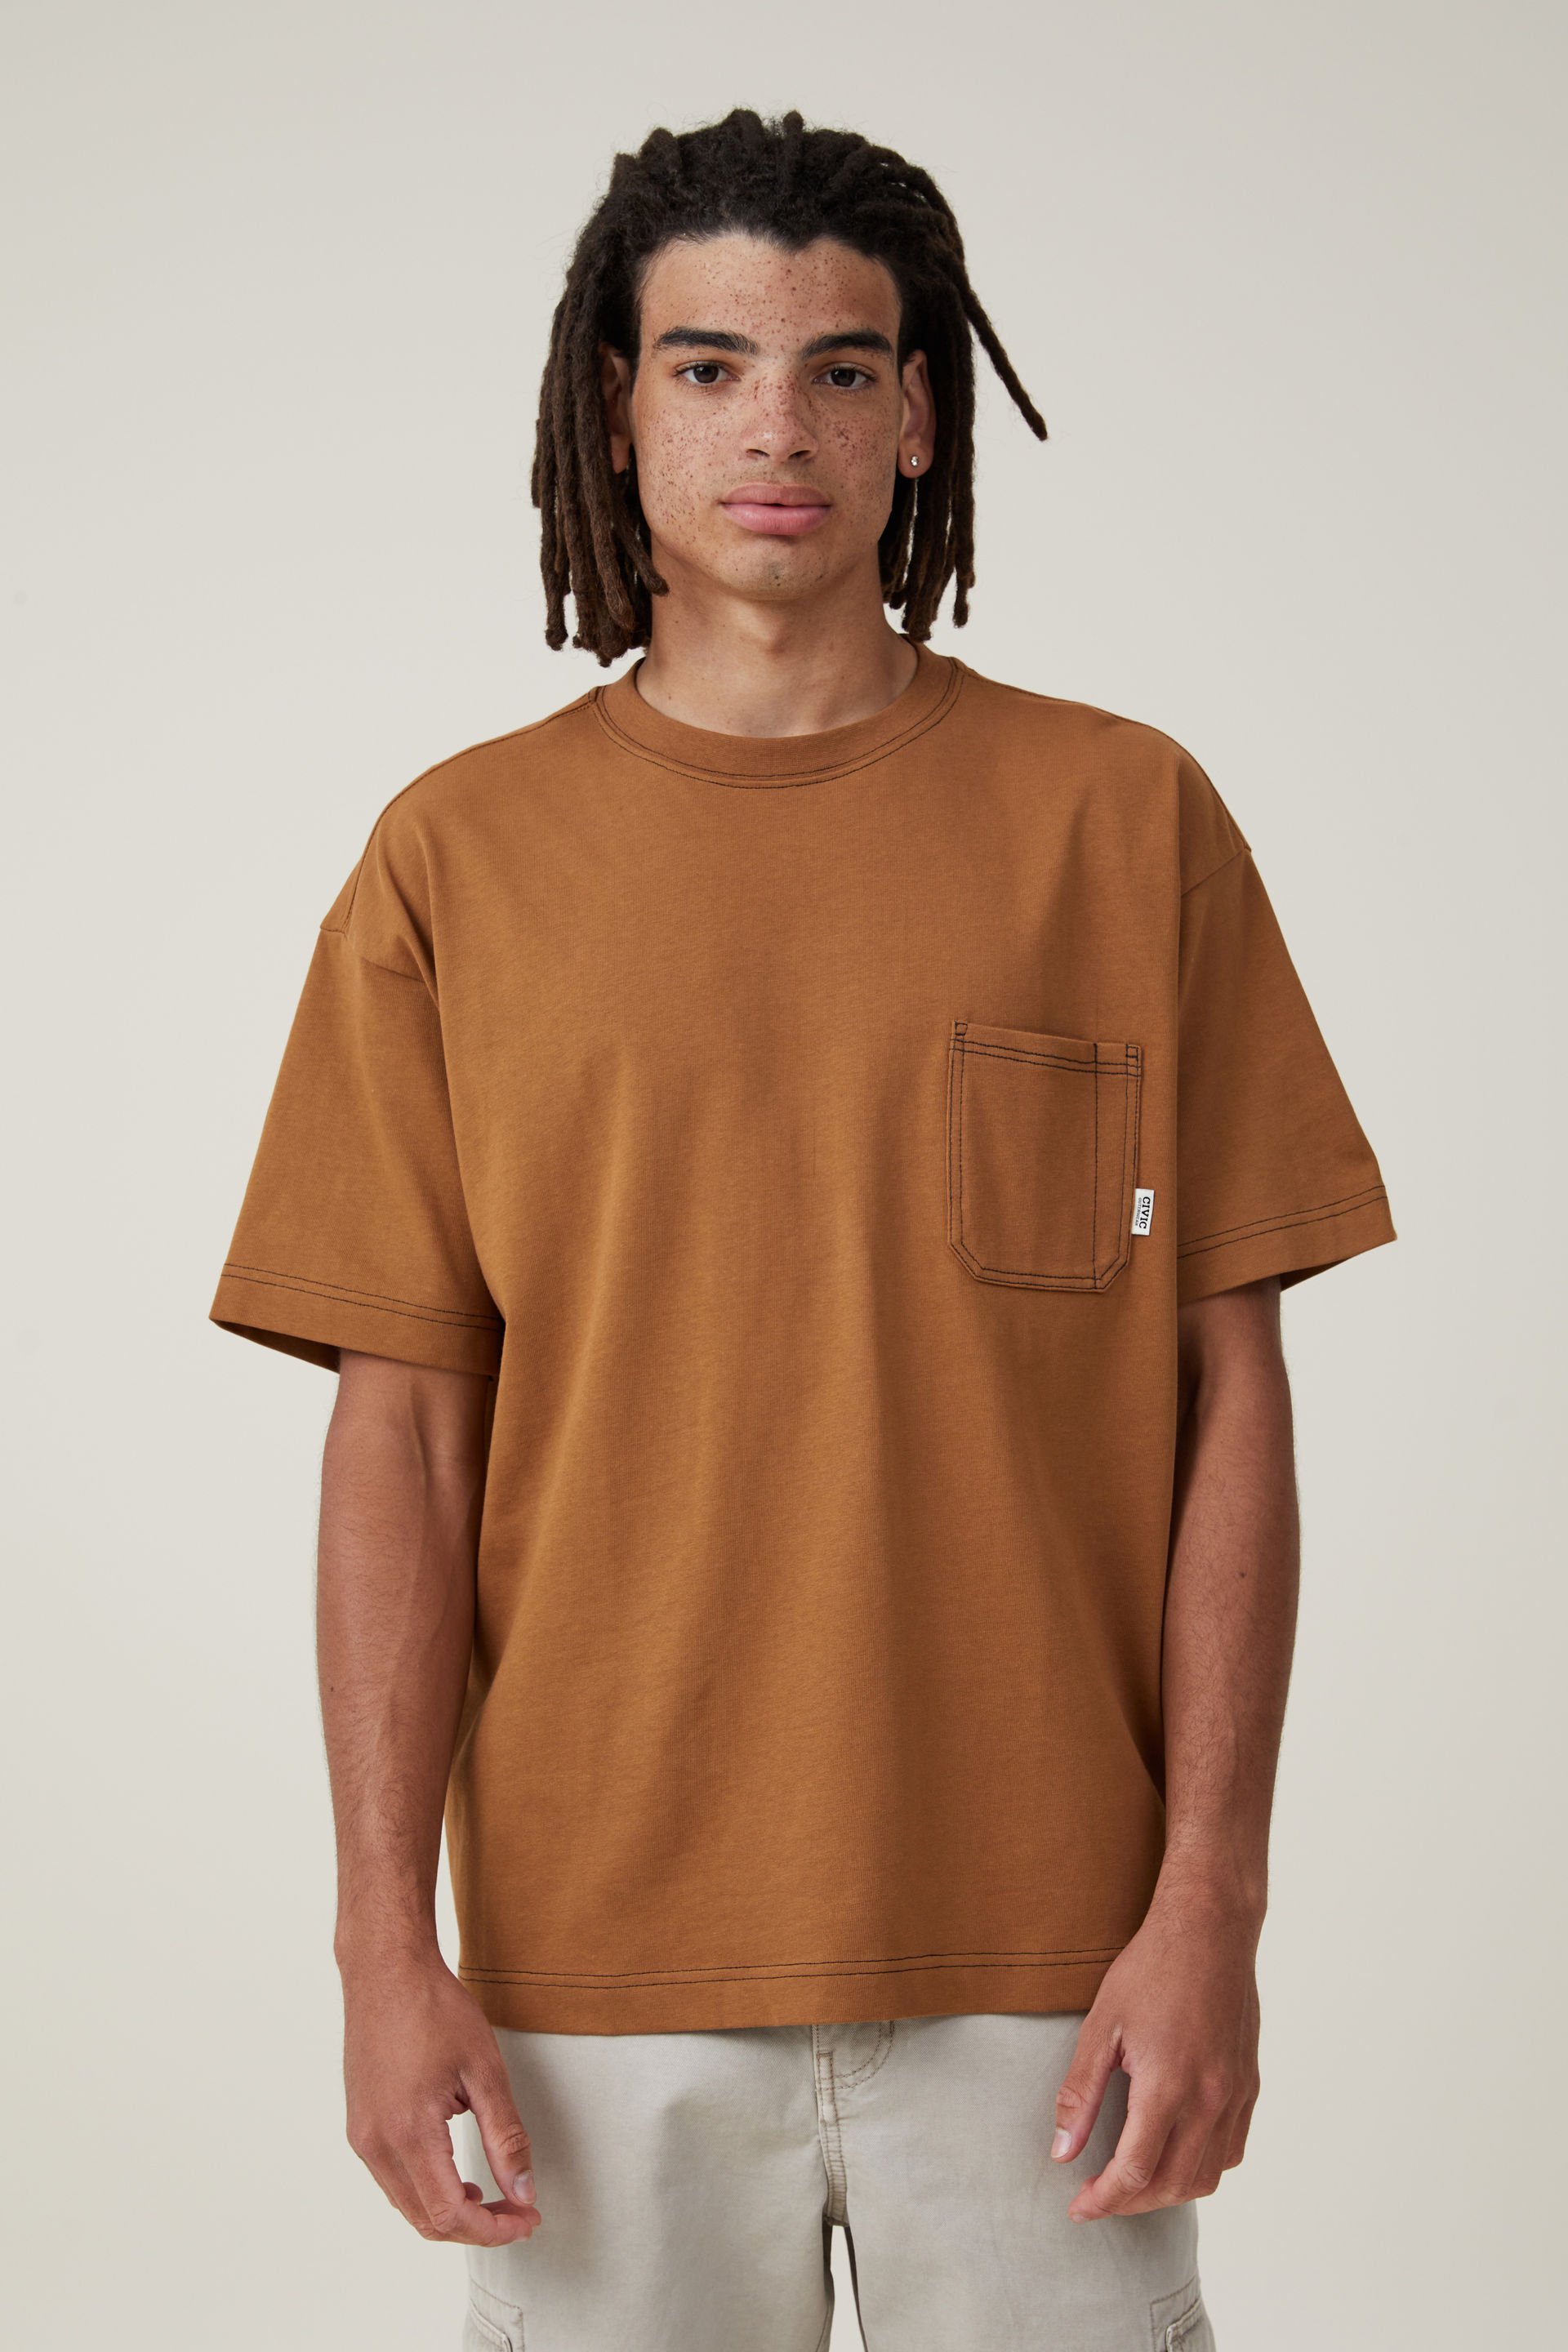 Cotton On Men - Box Fit Pocket T-Shirt - Ginger / civic contrast